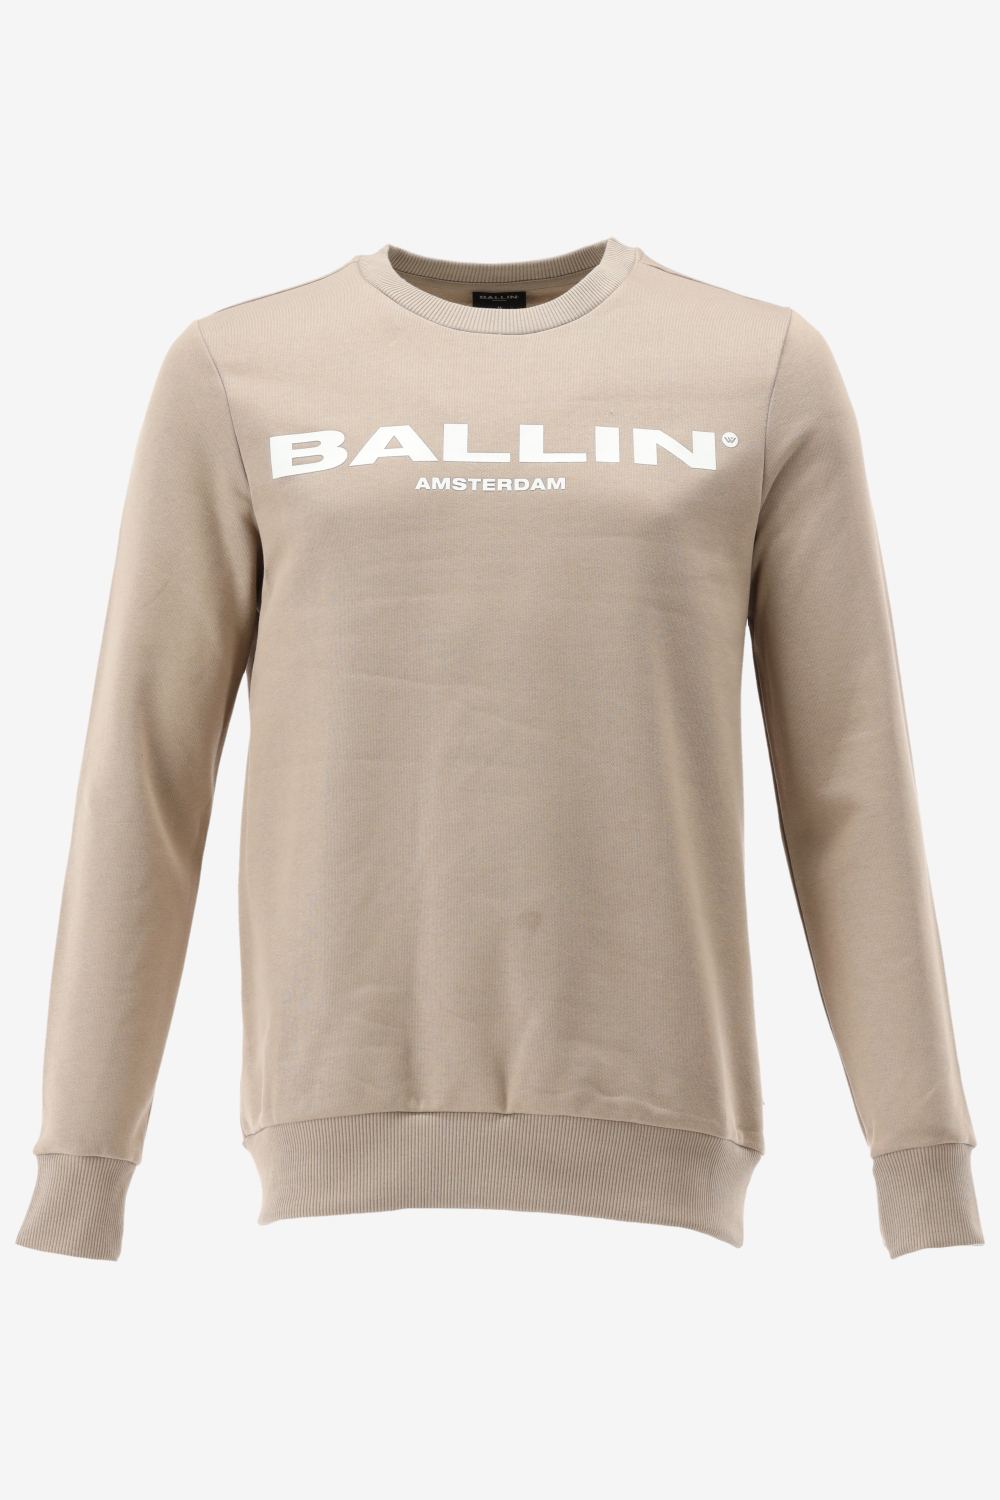 Ballin Amsterdam - Heren Slim Fit Original Sweater - Bruin - Maat XL